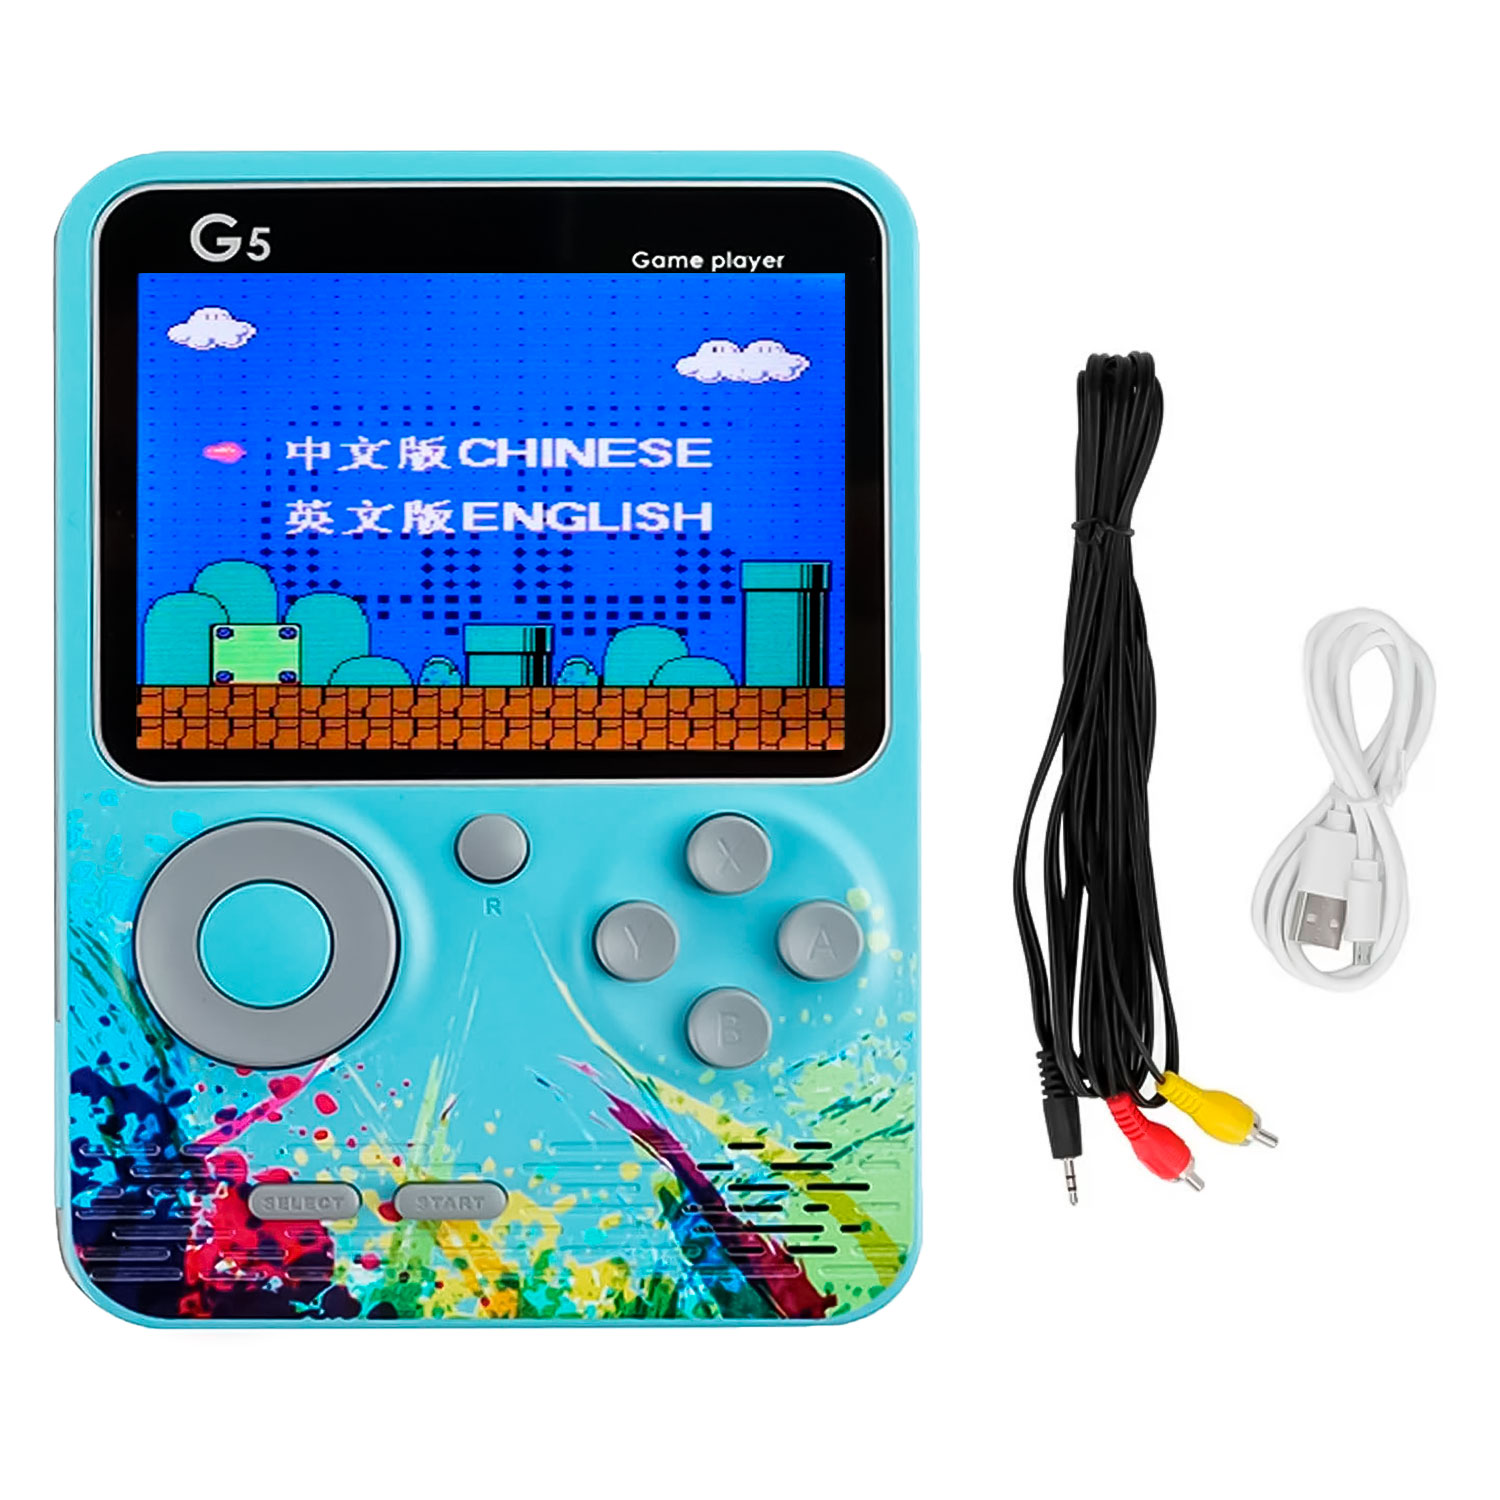 Console Portátil Game Boy Game Box G5 500 Jogos - Azul